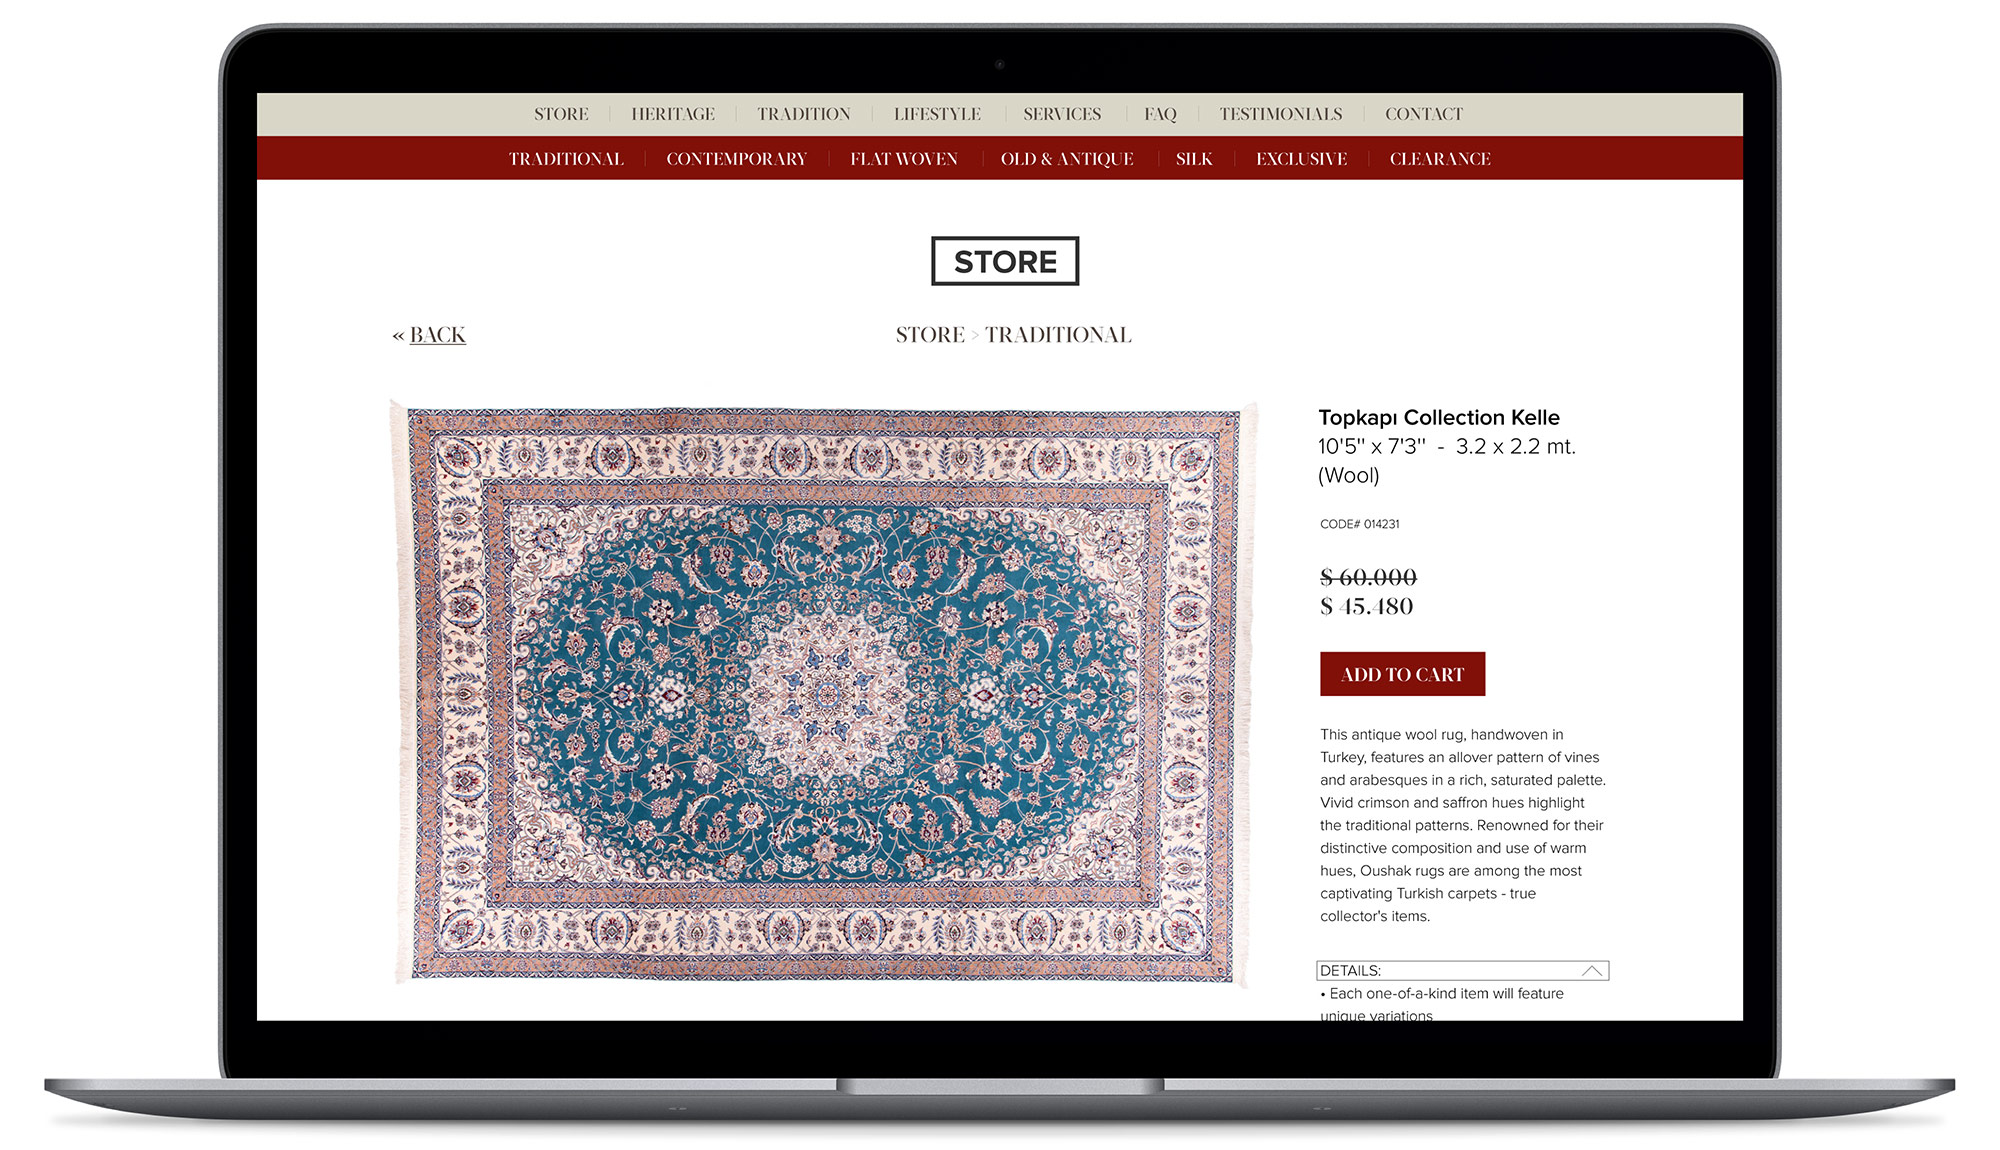 <strong>Orient Handmade Carpets</strong> E-commerce Website